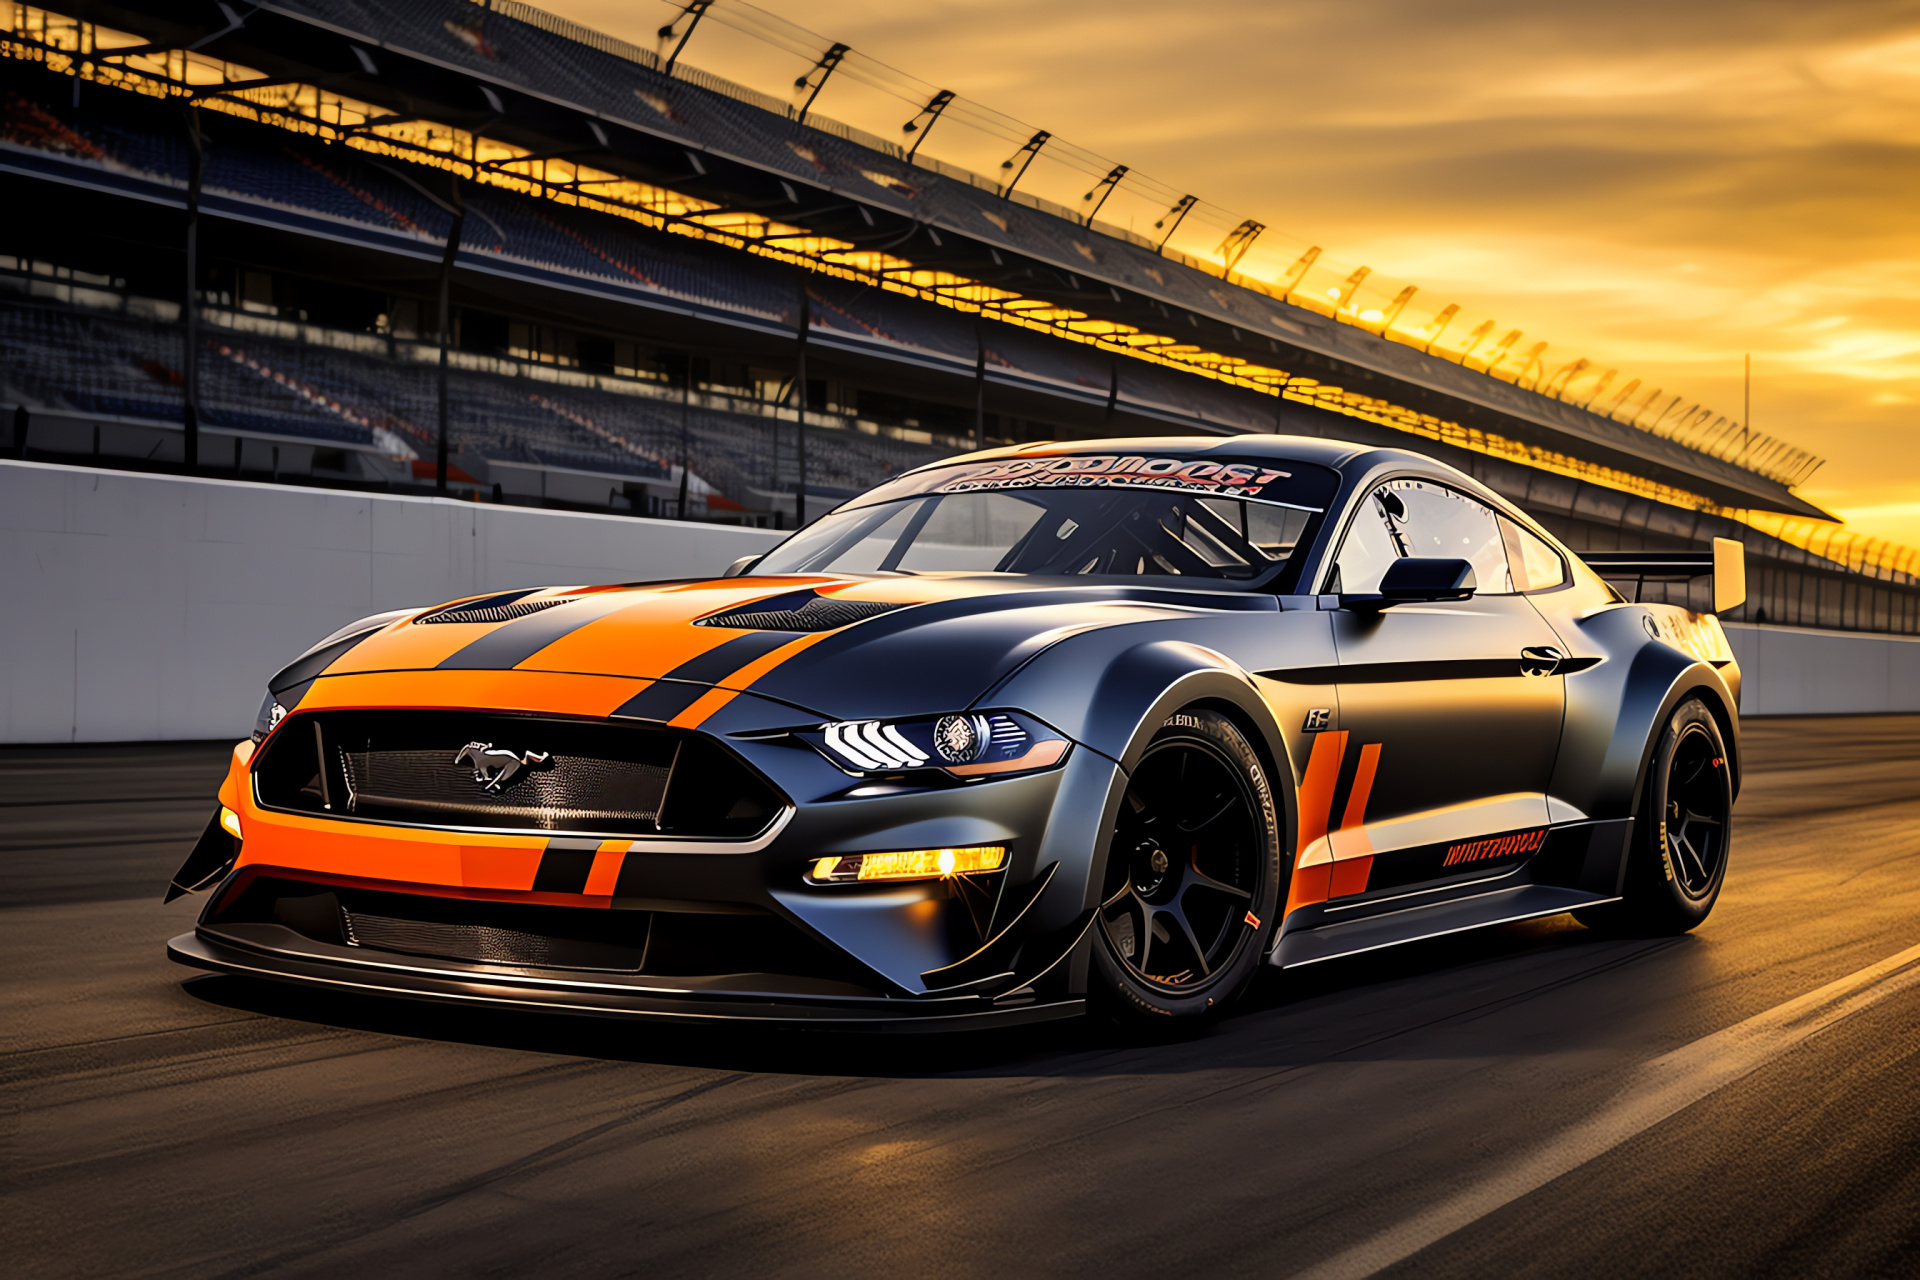 Racing Mustang GT4, Indianapolis Speedway, Motorsport event, Racing livery, Speed competition, HD Desktop Wallpaper